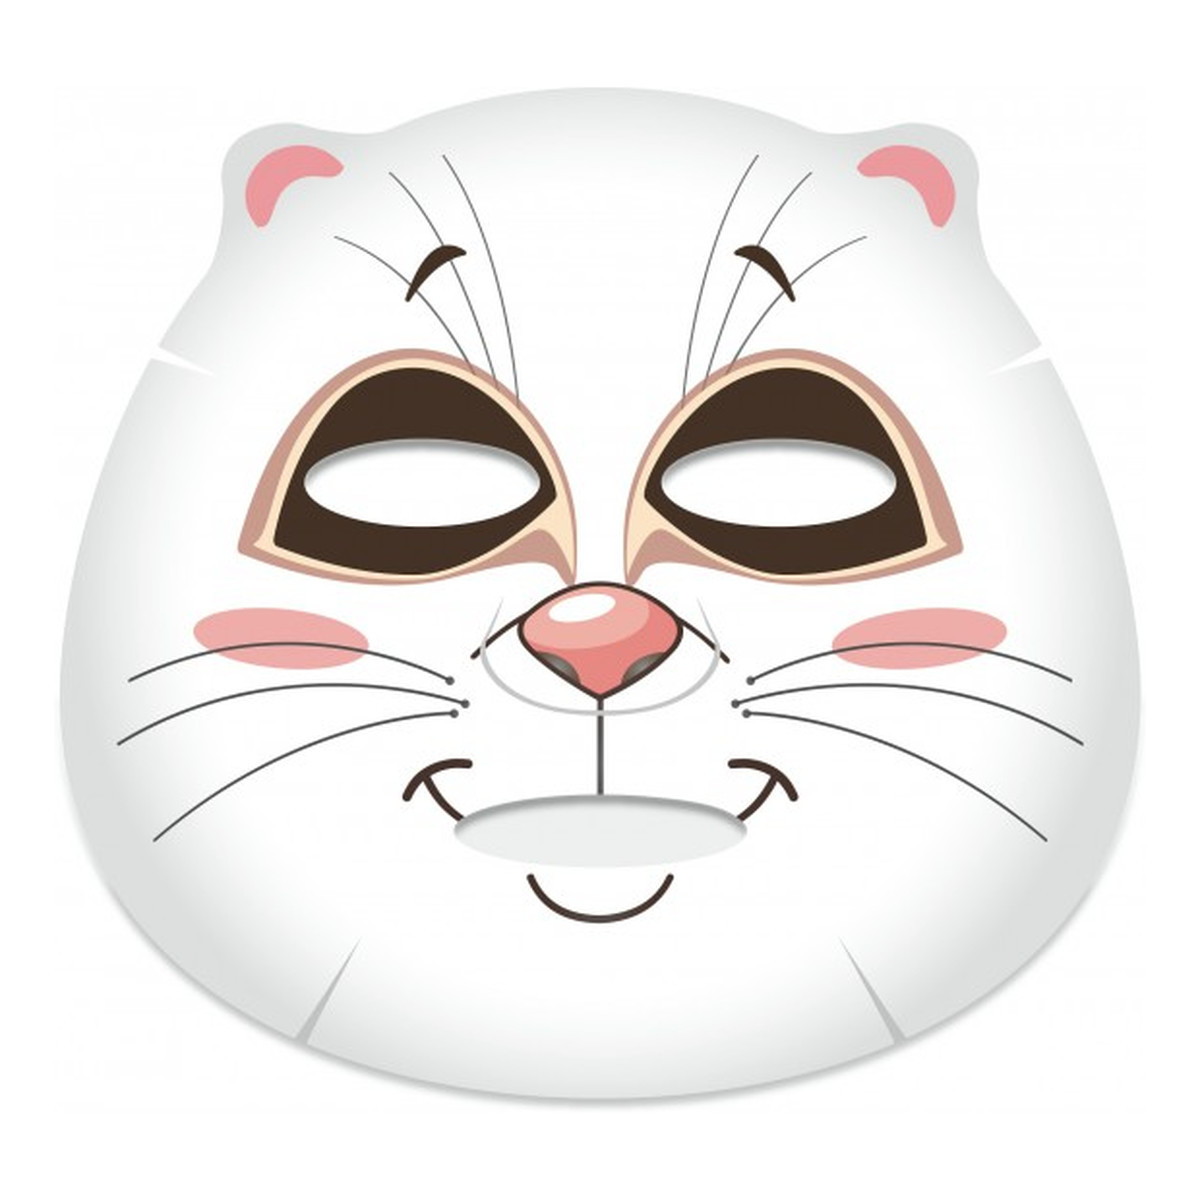 Belleza Castillo Edge Cutimal Cat Whitening Mask 25g